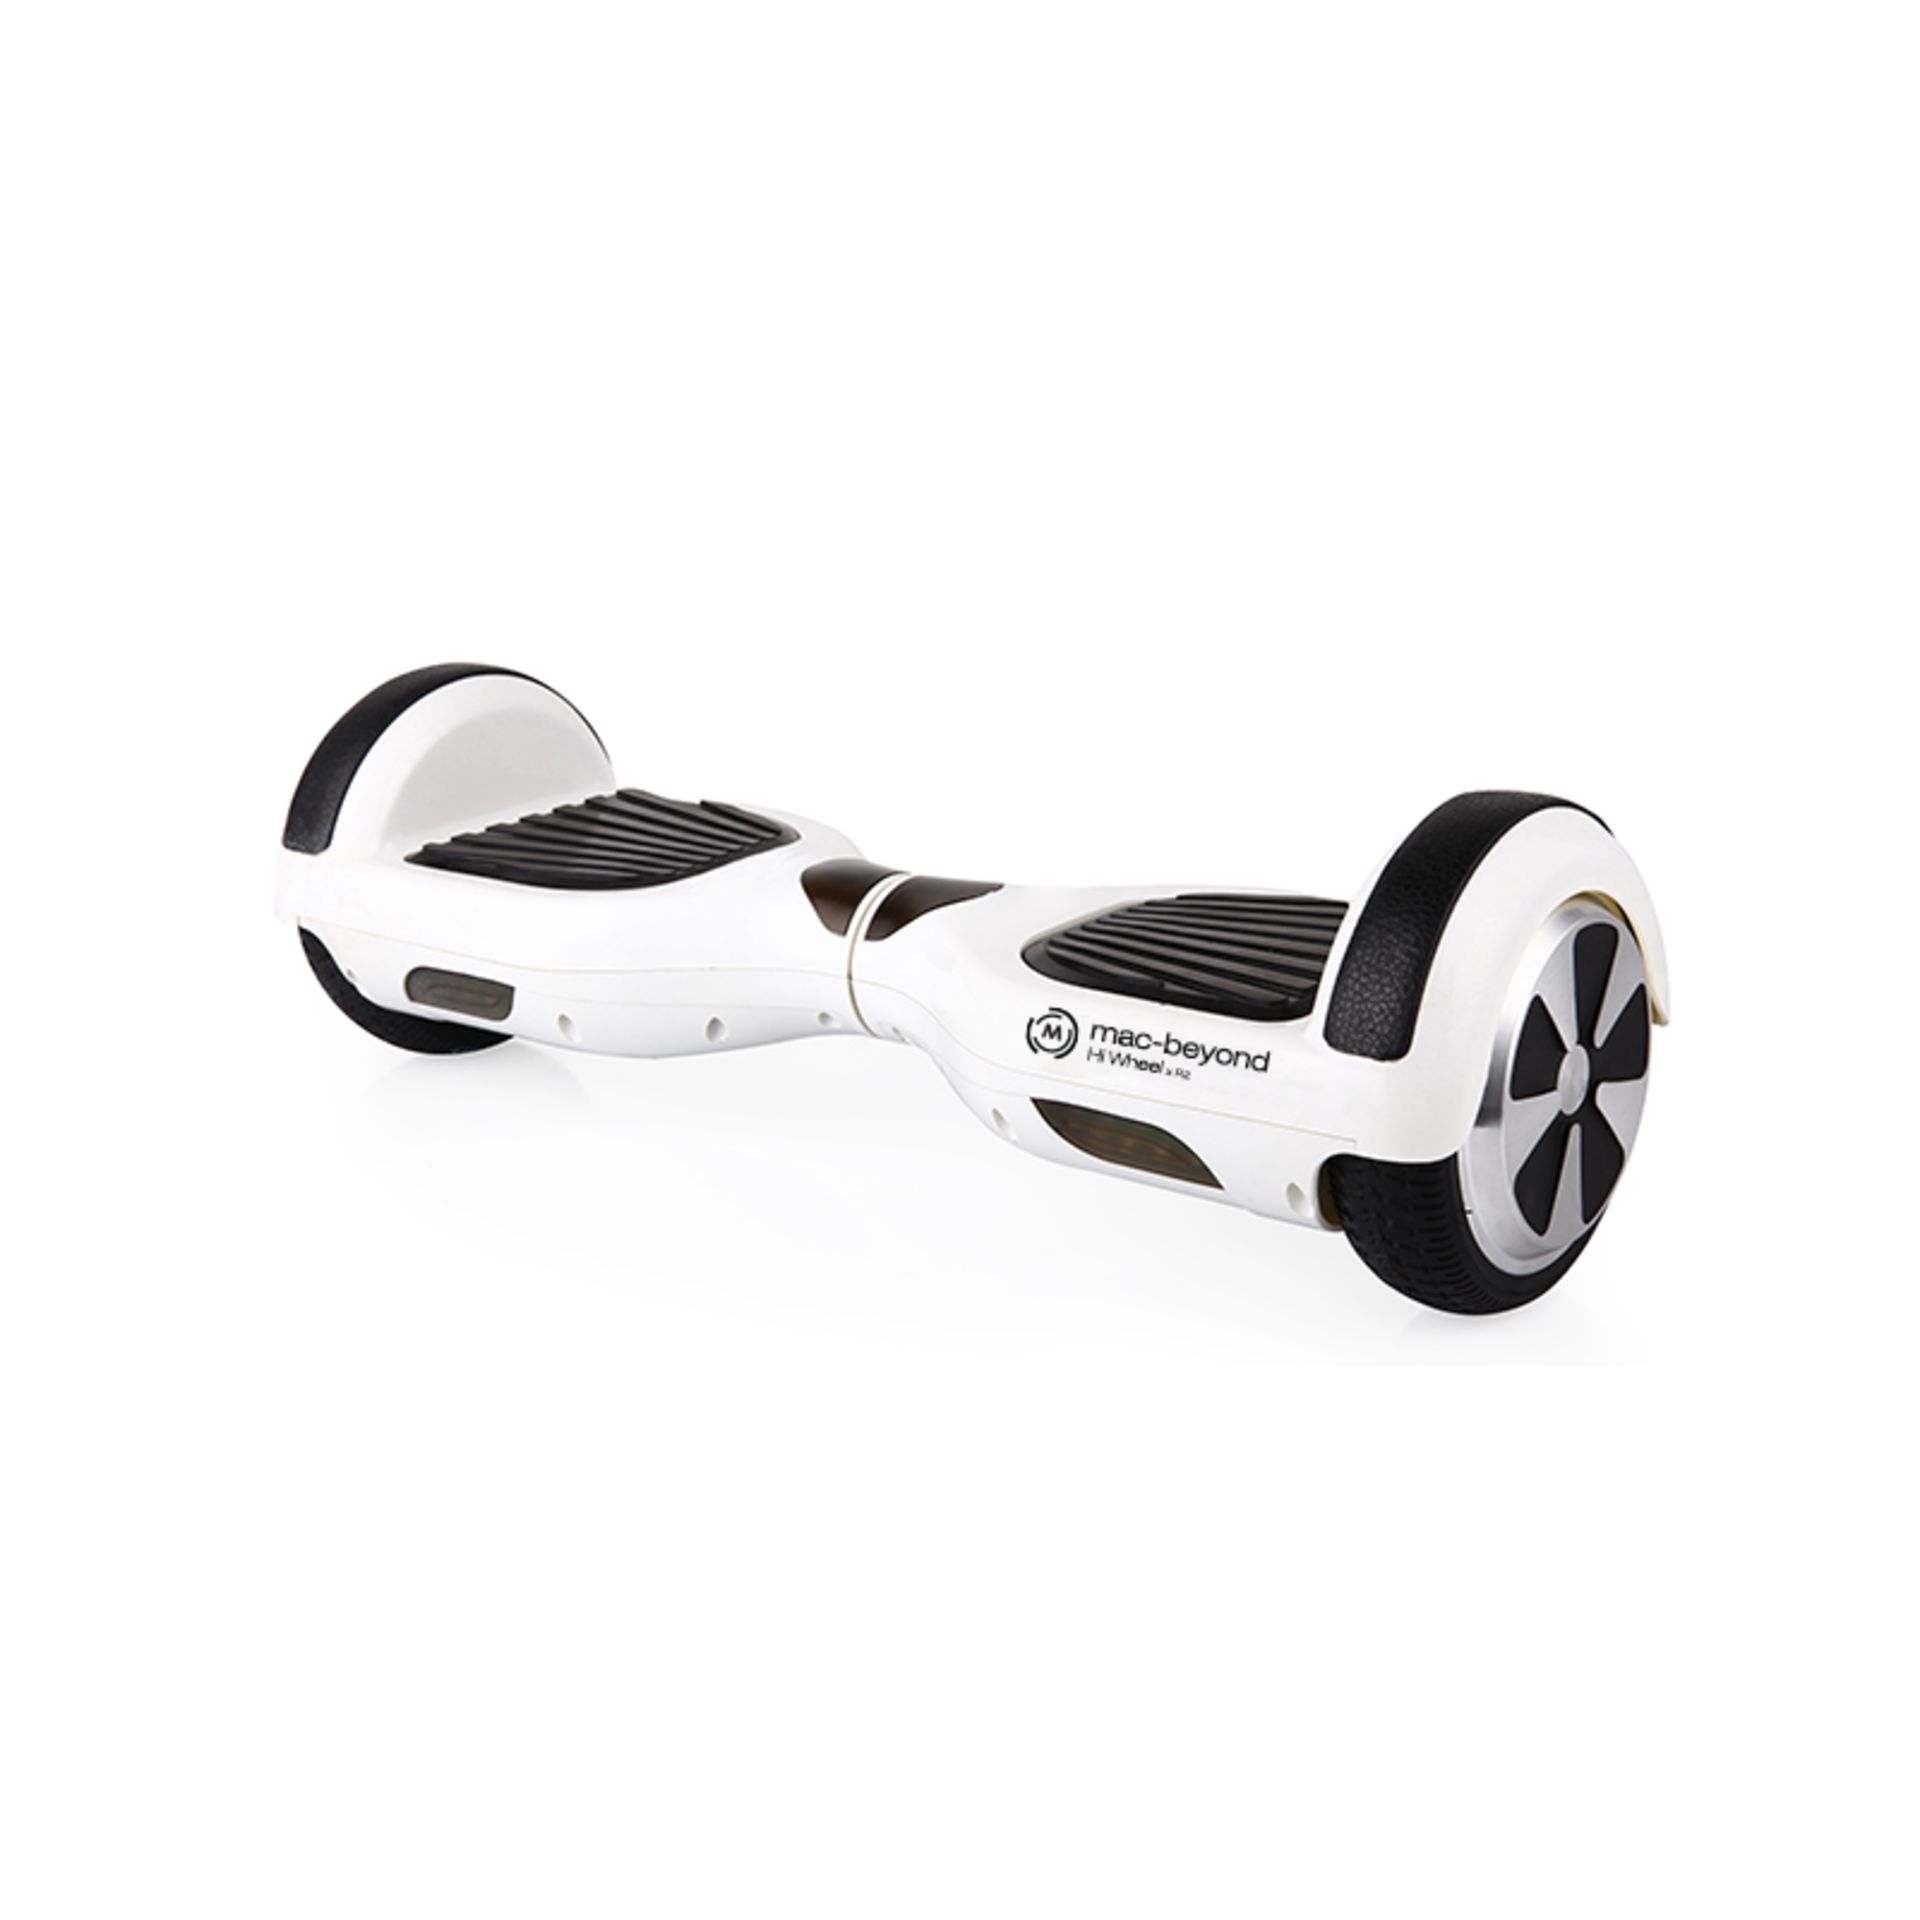 macbeyond x Hi wheel Series, White Model R2 LED (6.5 inch wheels, Best Seller) Smart personal - Image 2 of 8